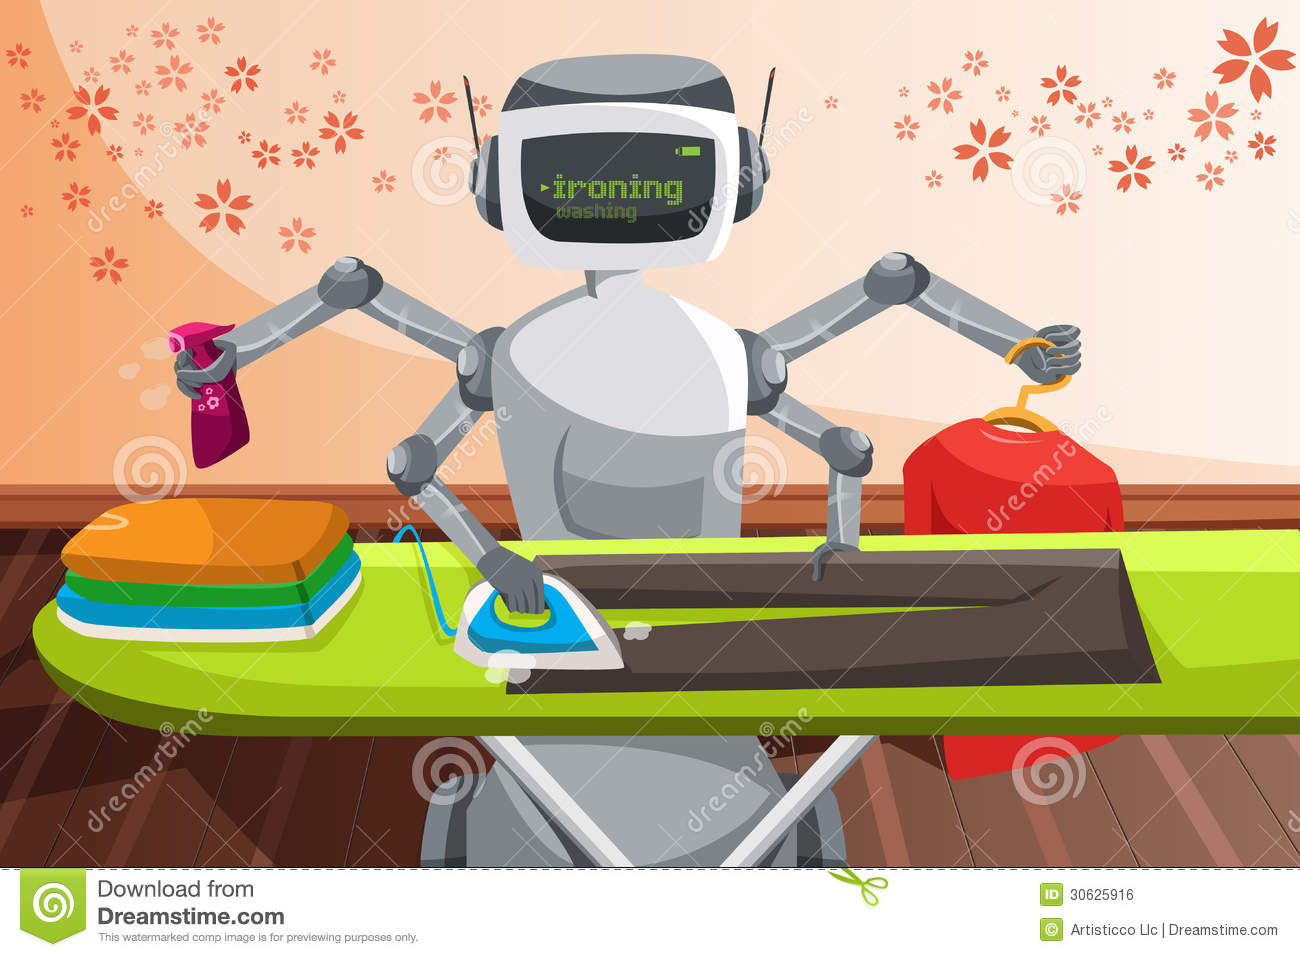 Robot Ironing Clothes Royalty Free Stock Image   Image  30625916